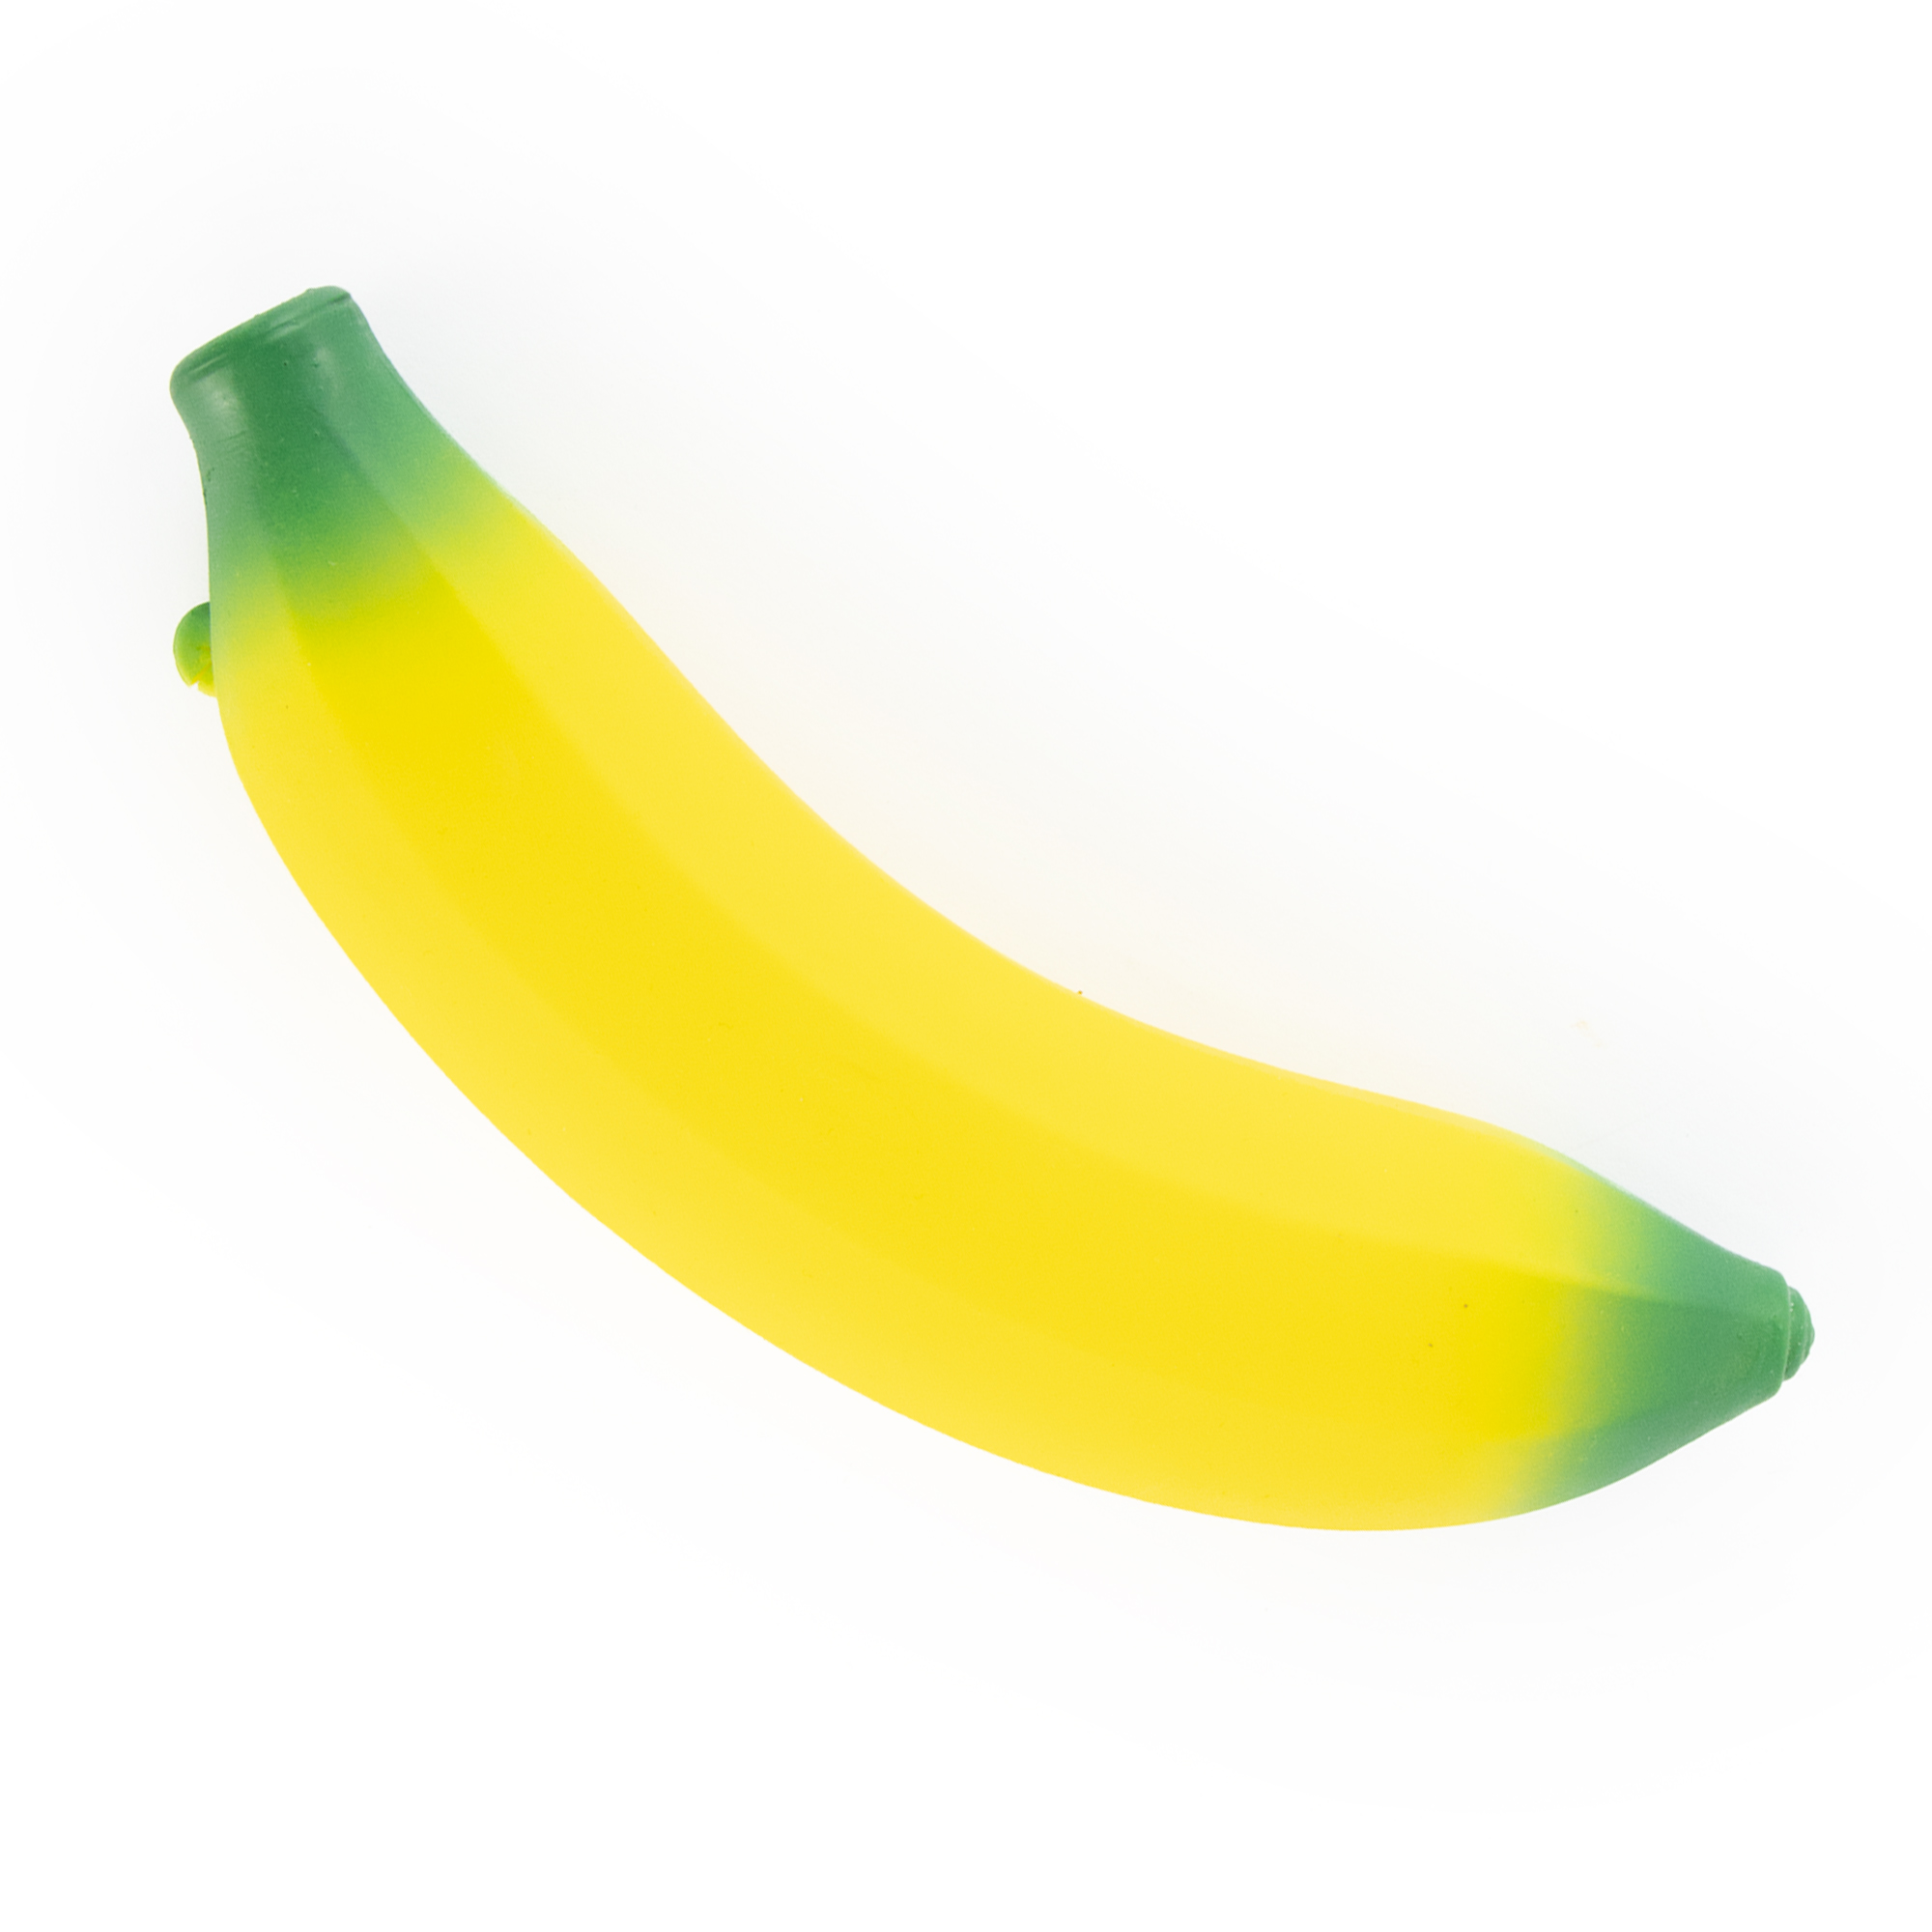 Vezi detalii pentru Jucărie antistres - Squishy banana